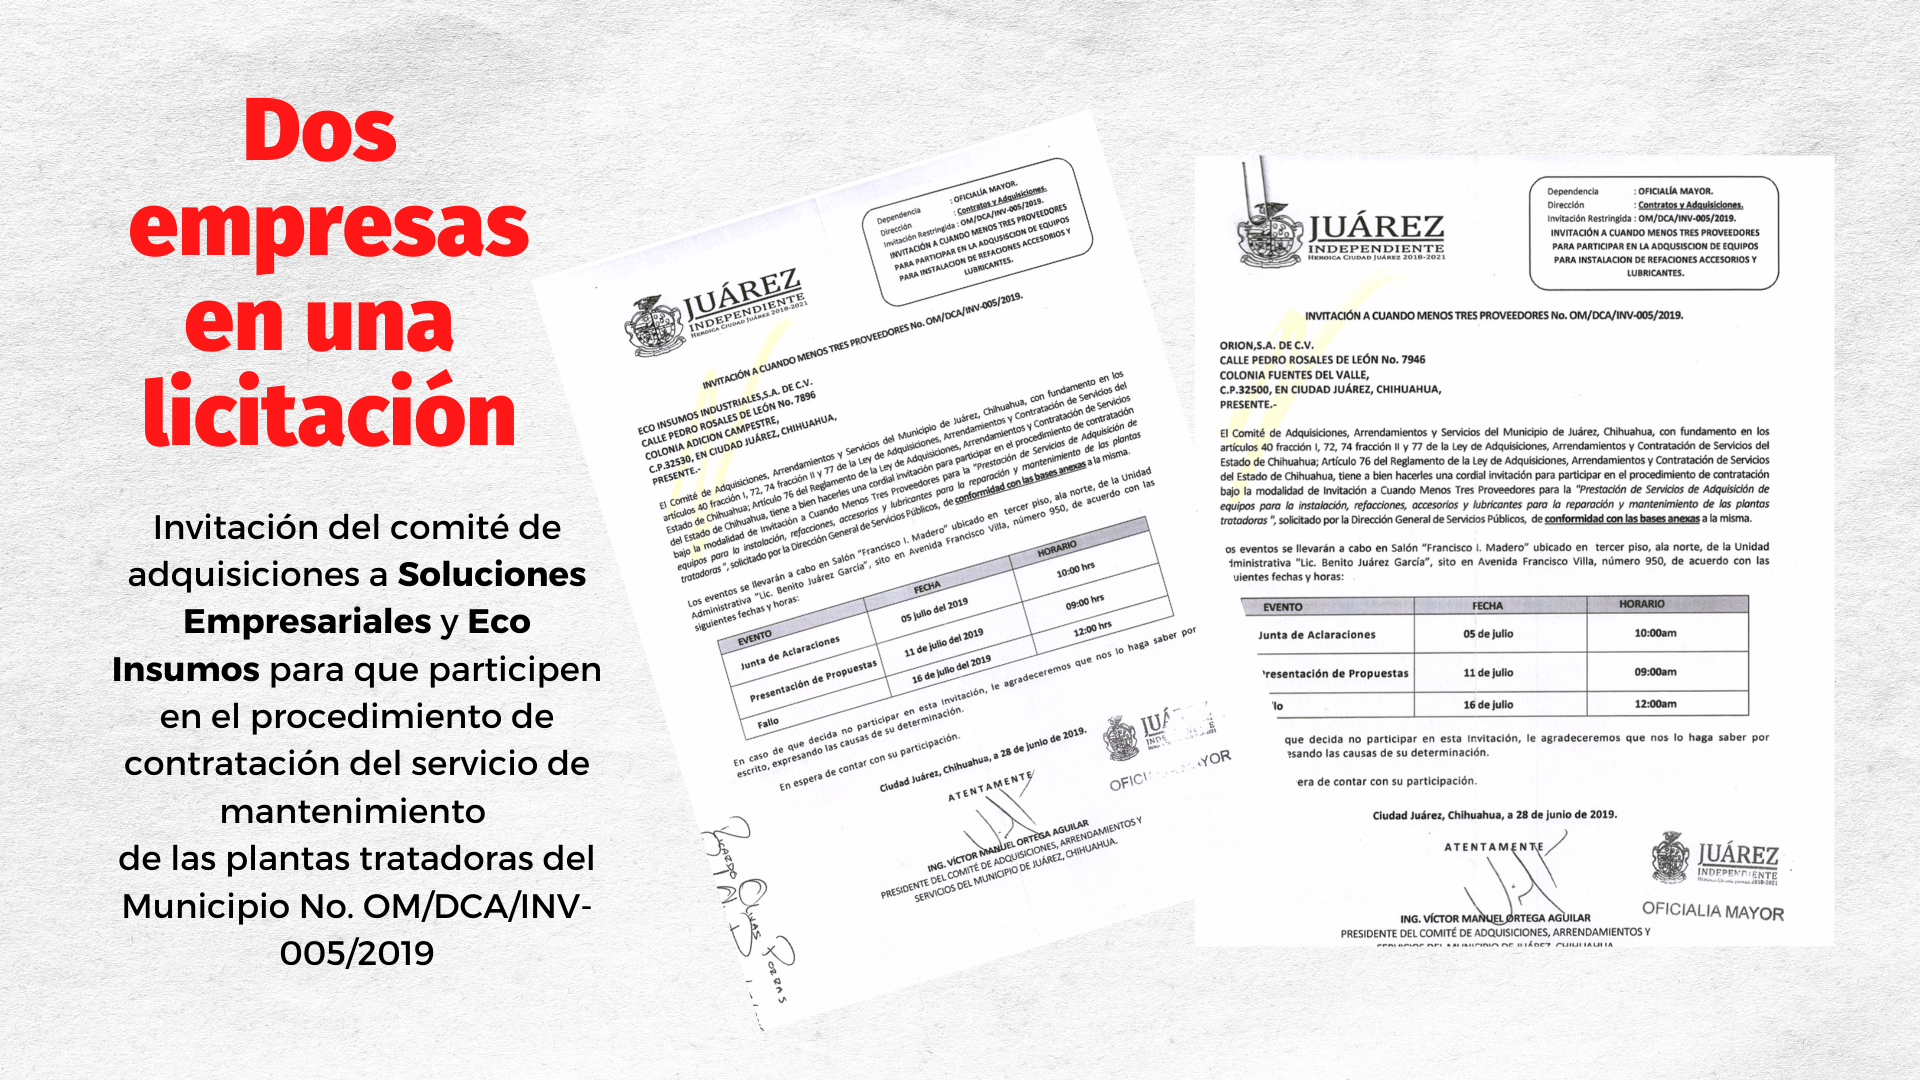 $!Municipio de Juárez, en Chihuahua, otorgó contratos por $46 millones a empresas de personas que emiten facturas falsas